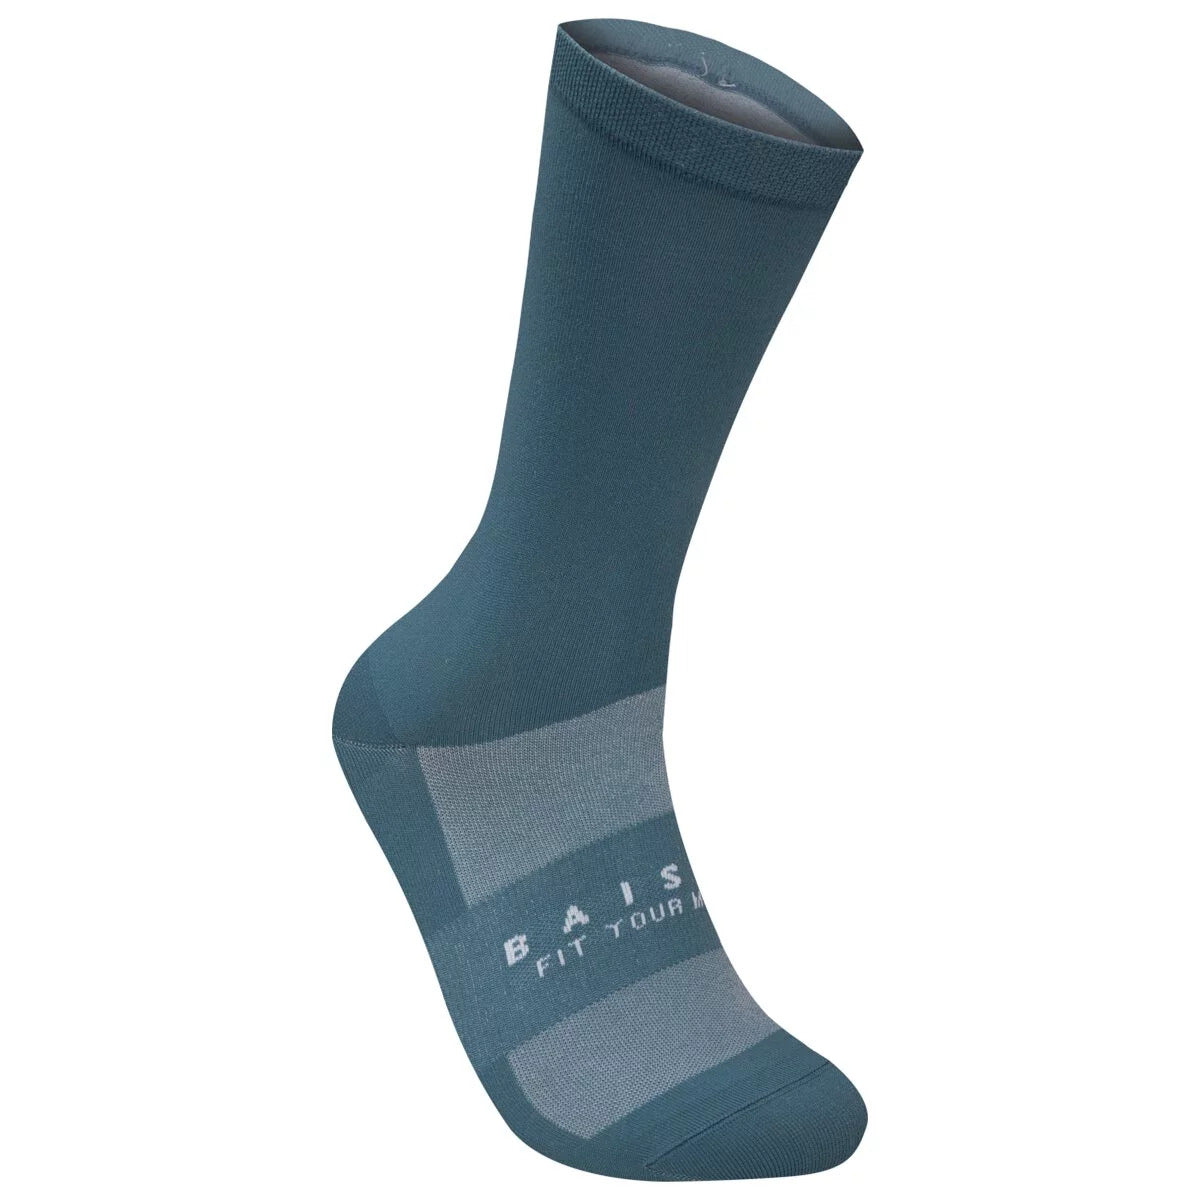 Baisky Premium Cycling Socks - TRSS129 Purity Dark Gray